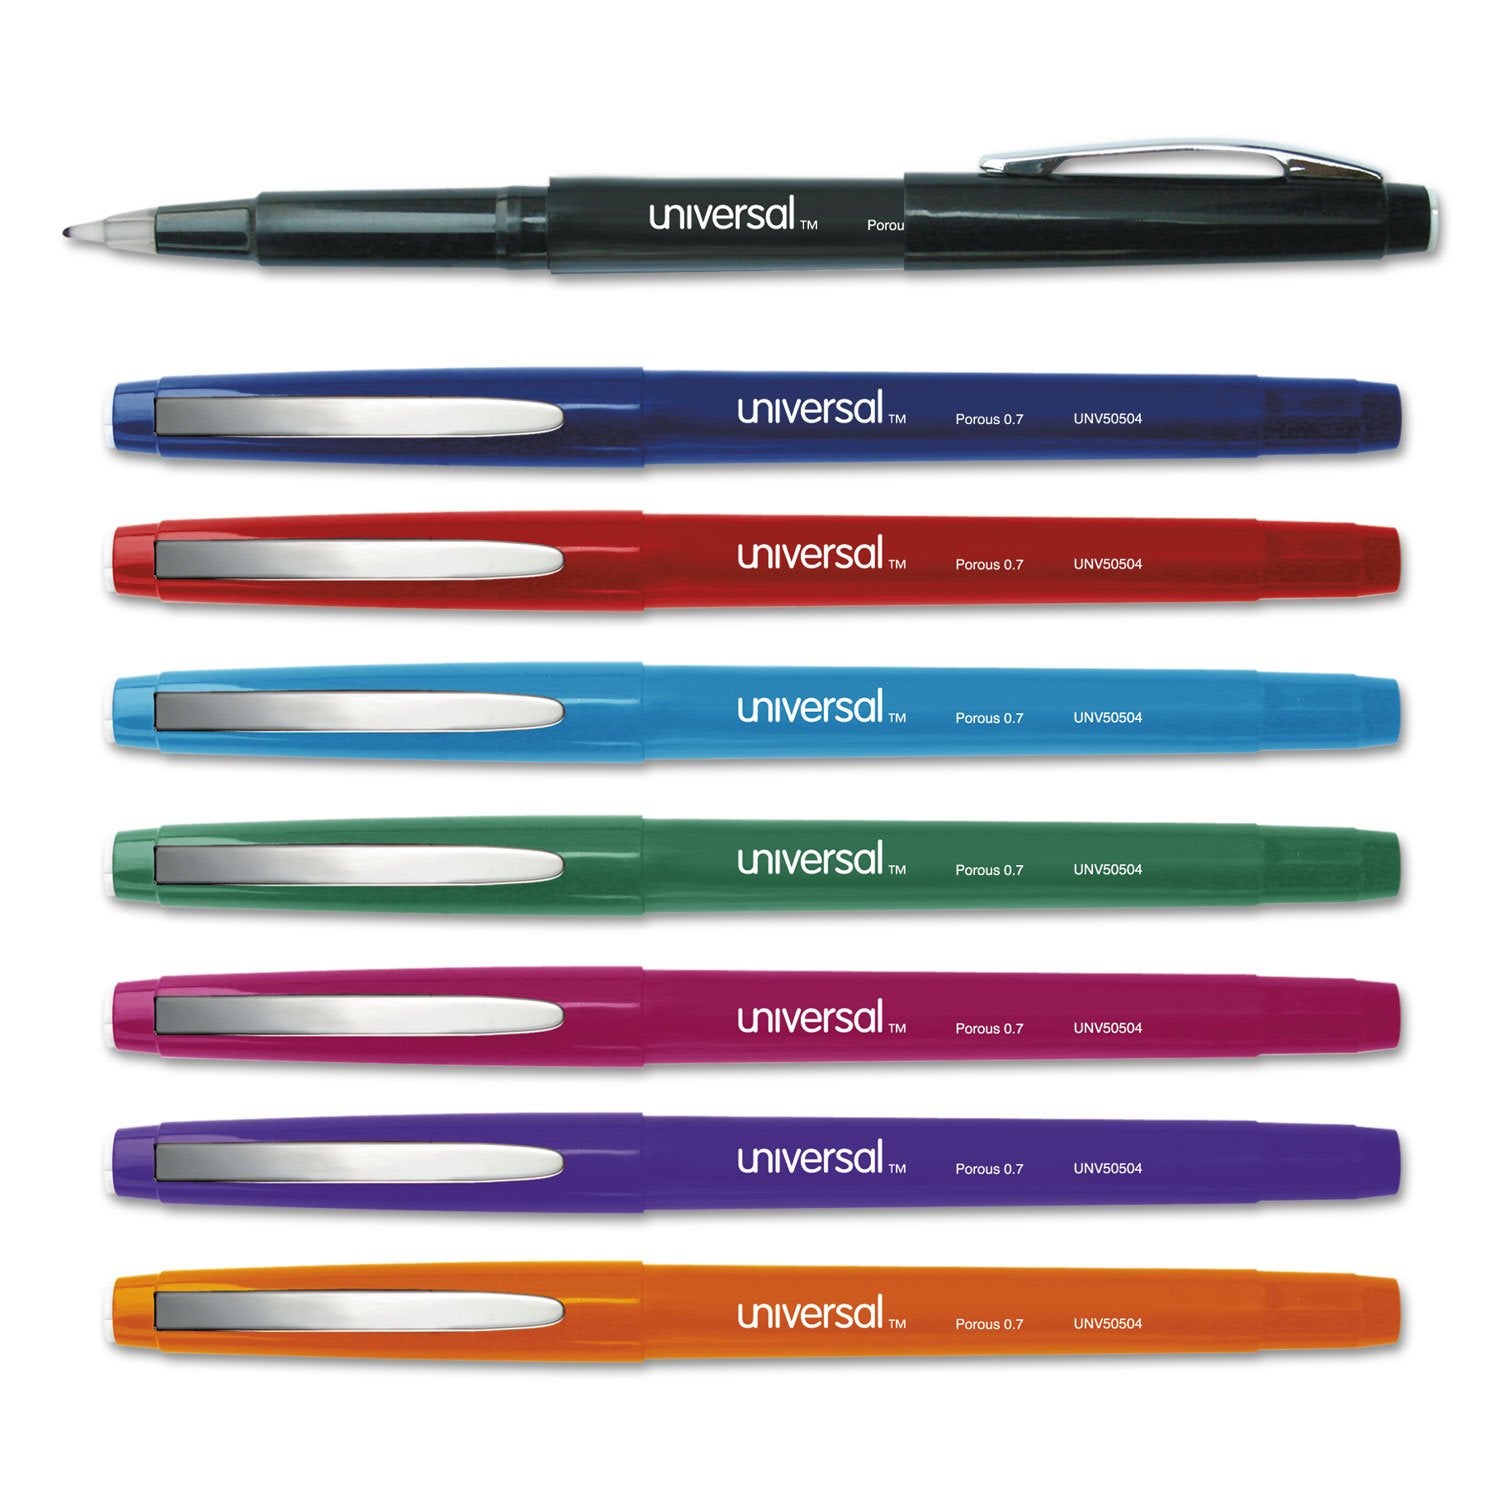 Sharpie Pens (2083009)